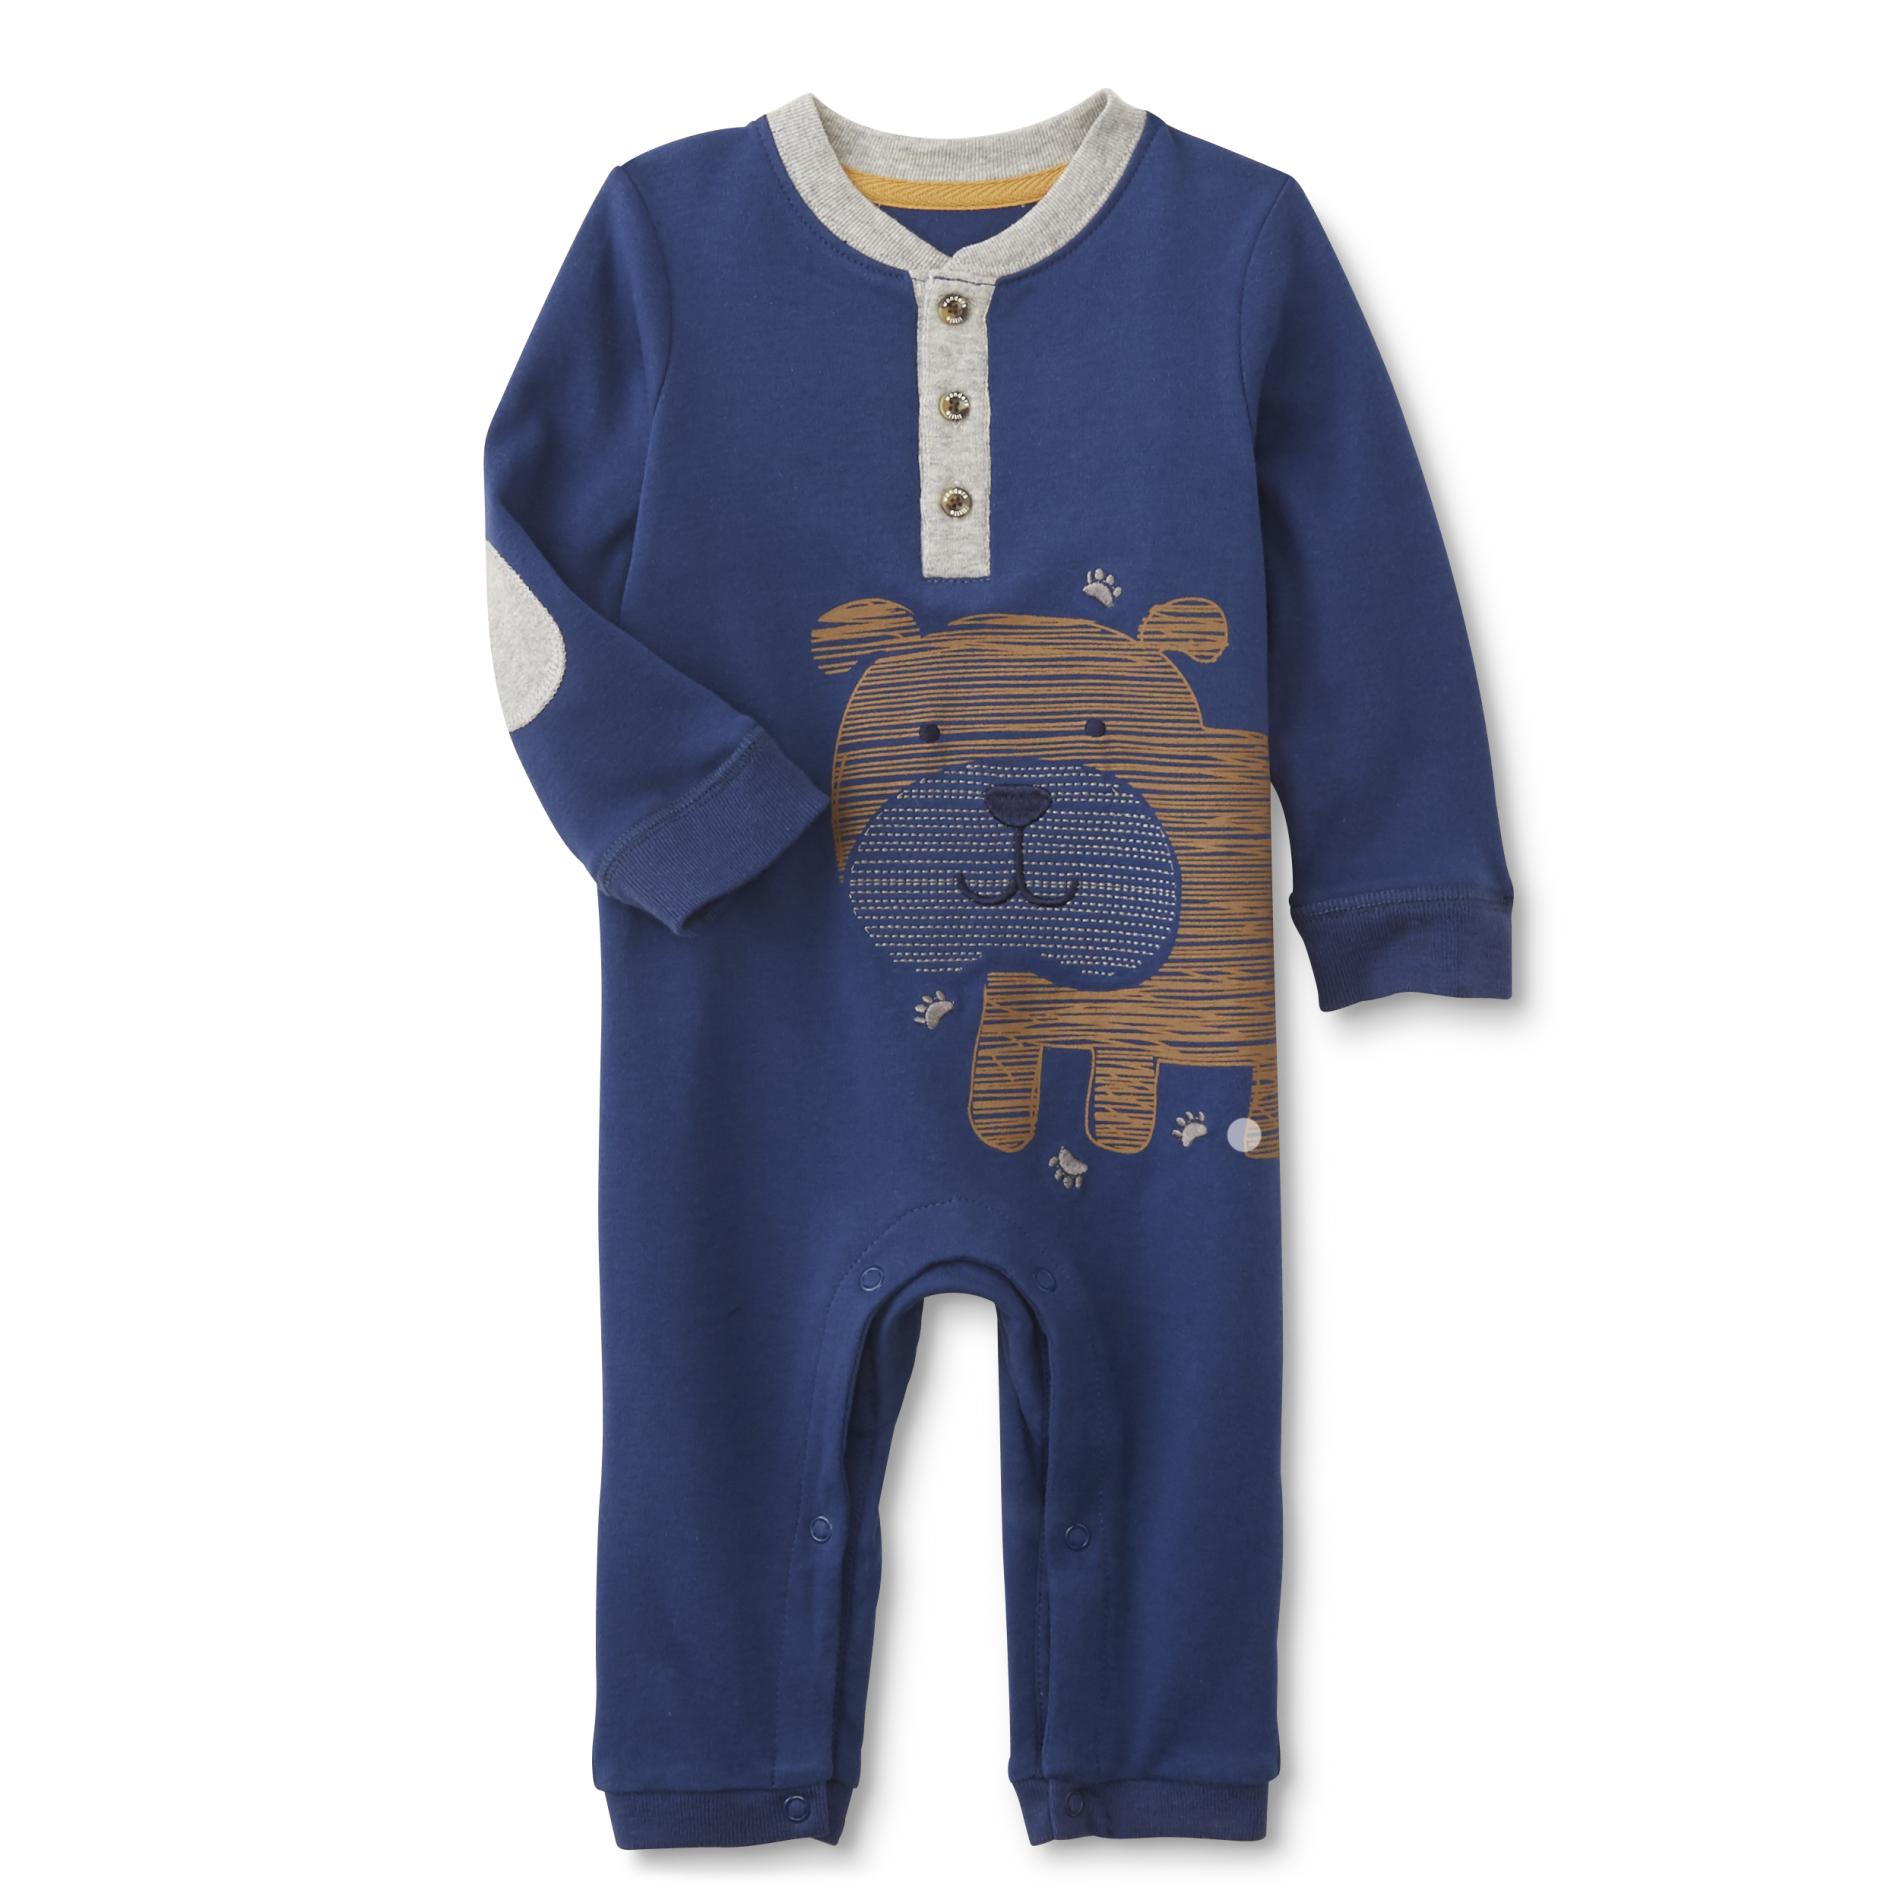 Little Wonders Newborn & Infant Boy's Jumpsuit - Bear